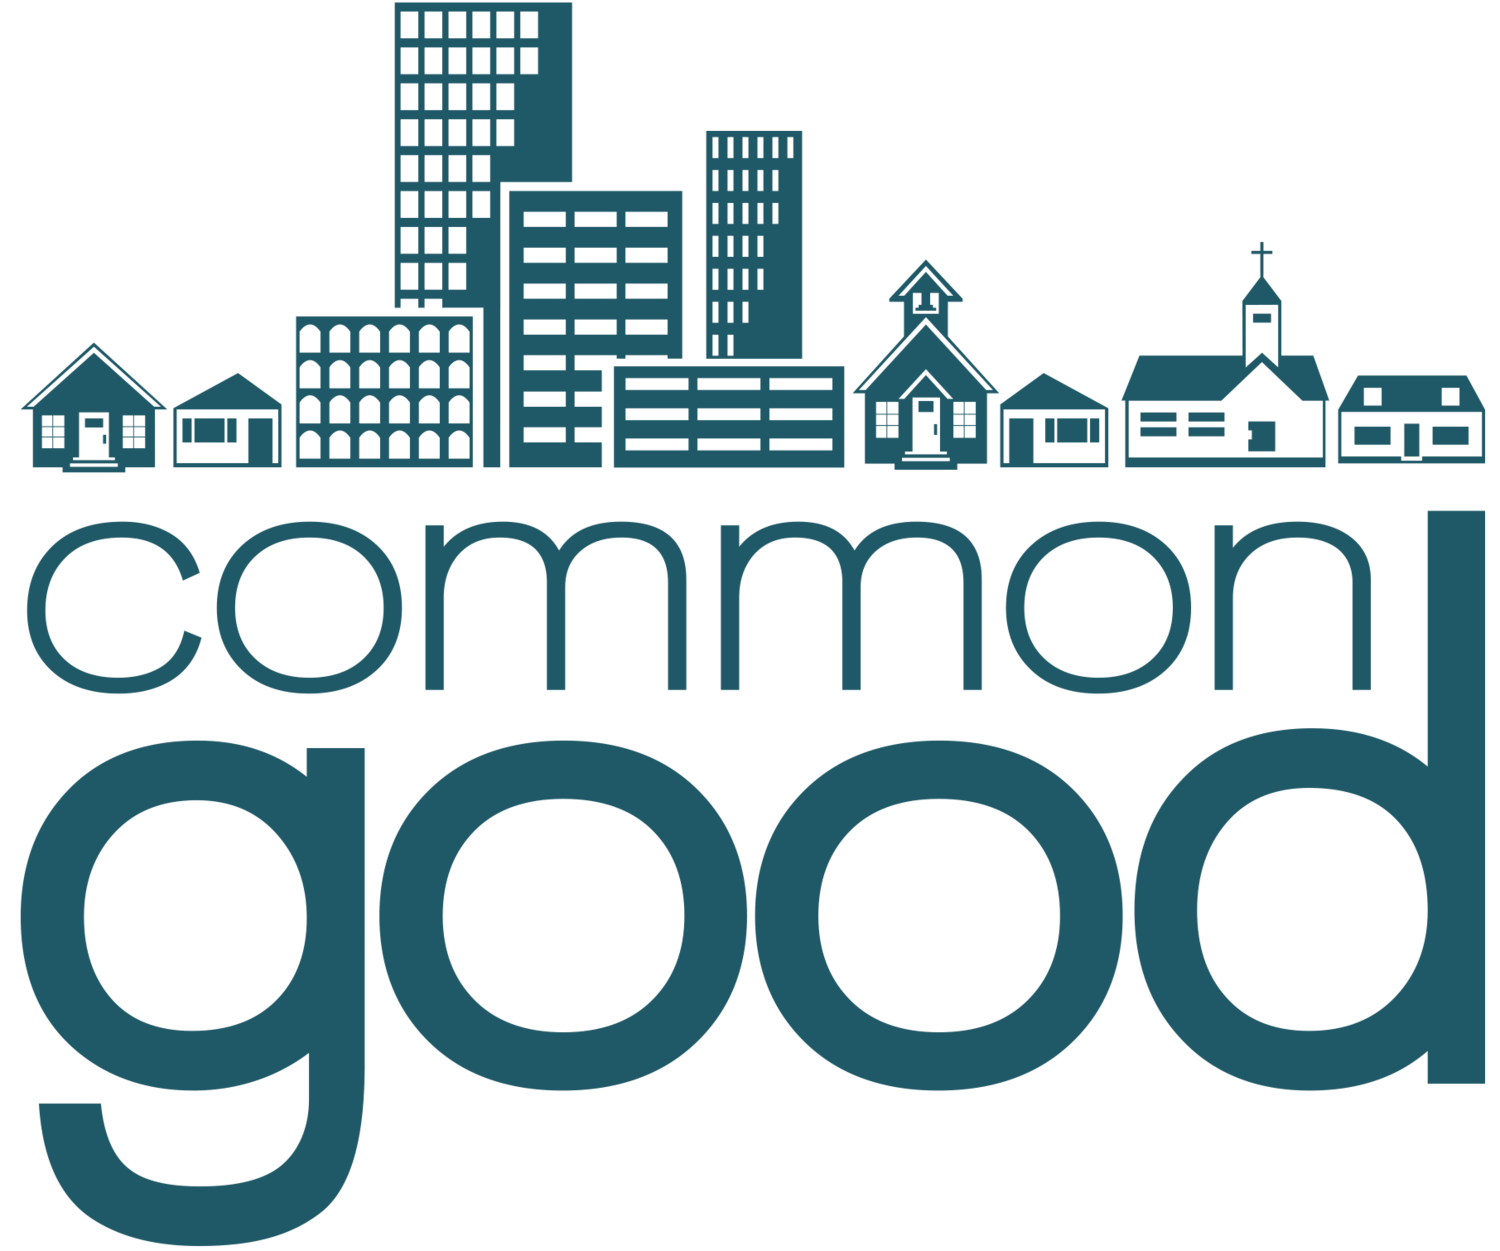 organization clipart common good